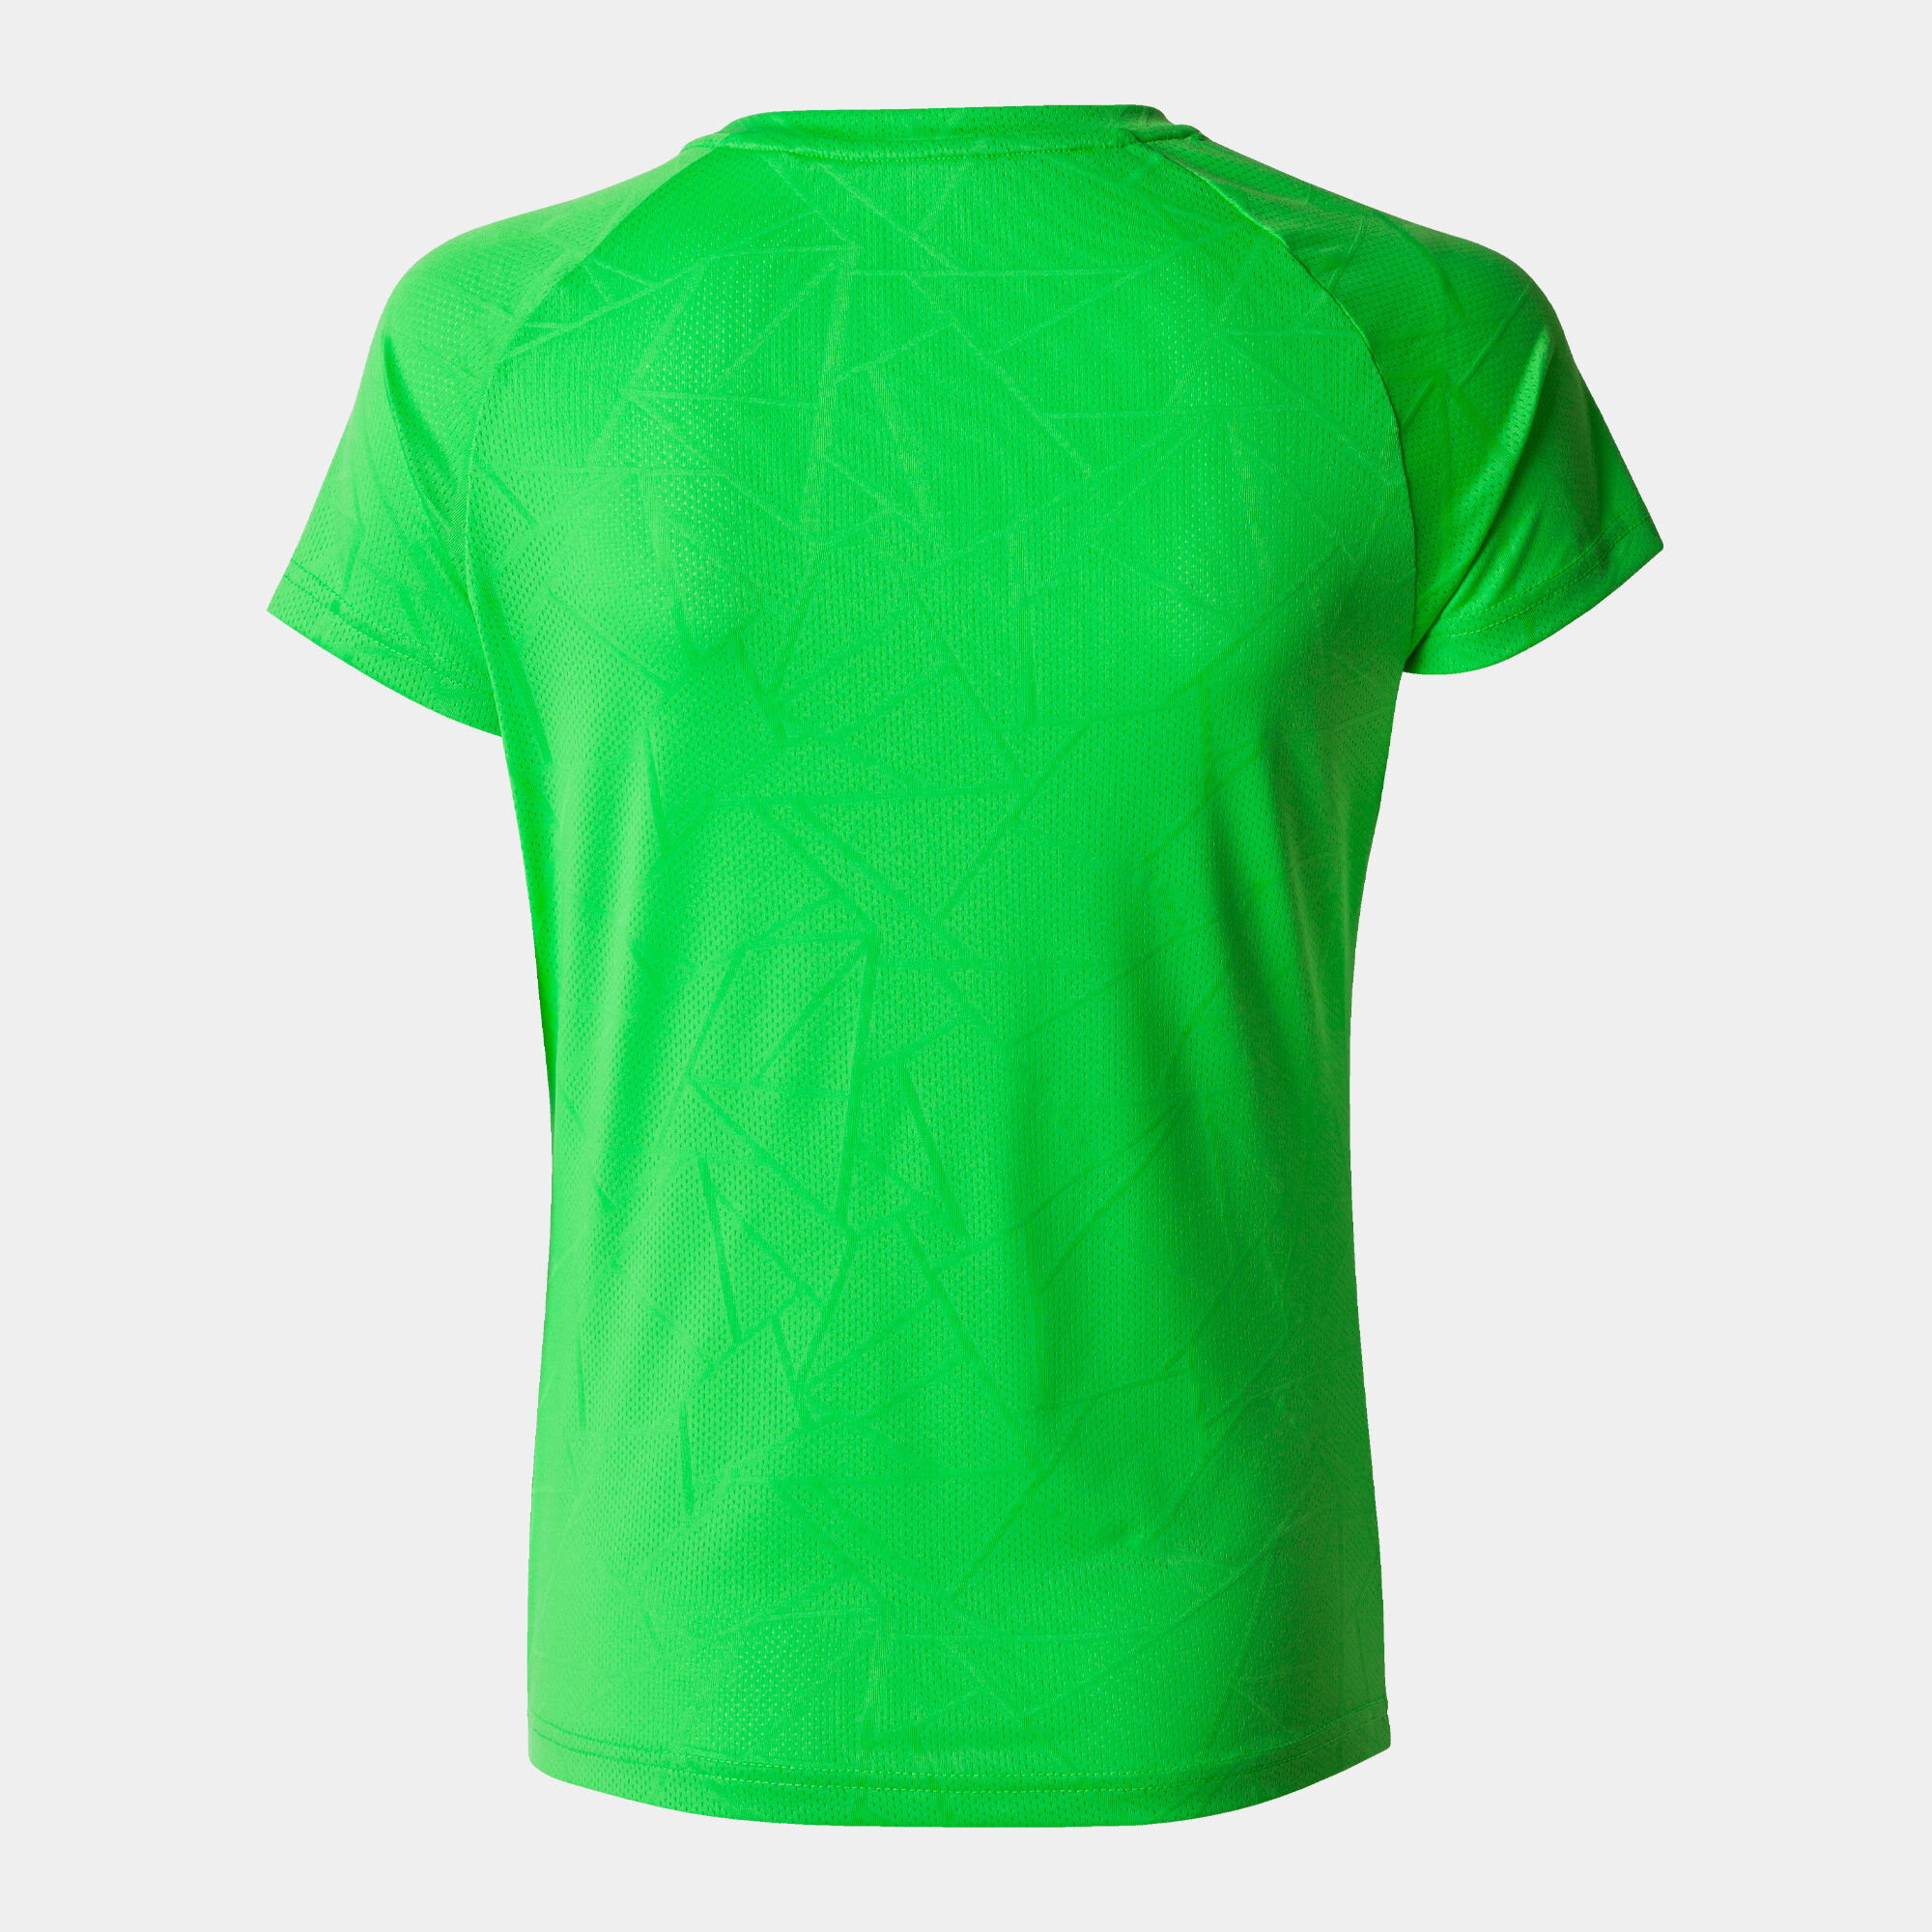 Camiseta manga corta mujer Elite IX verde flúor